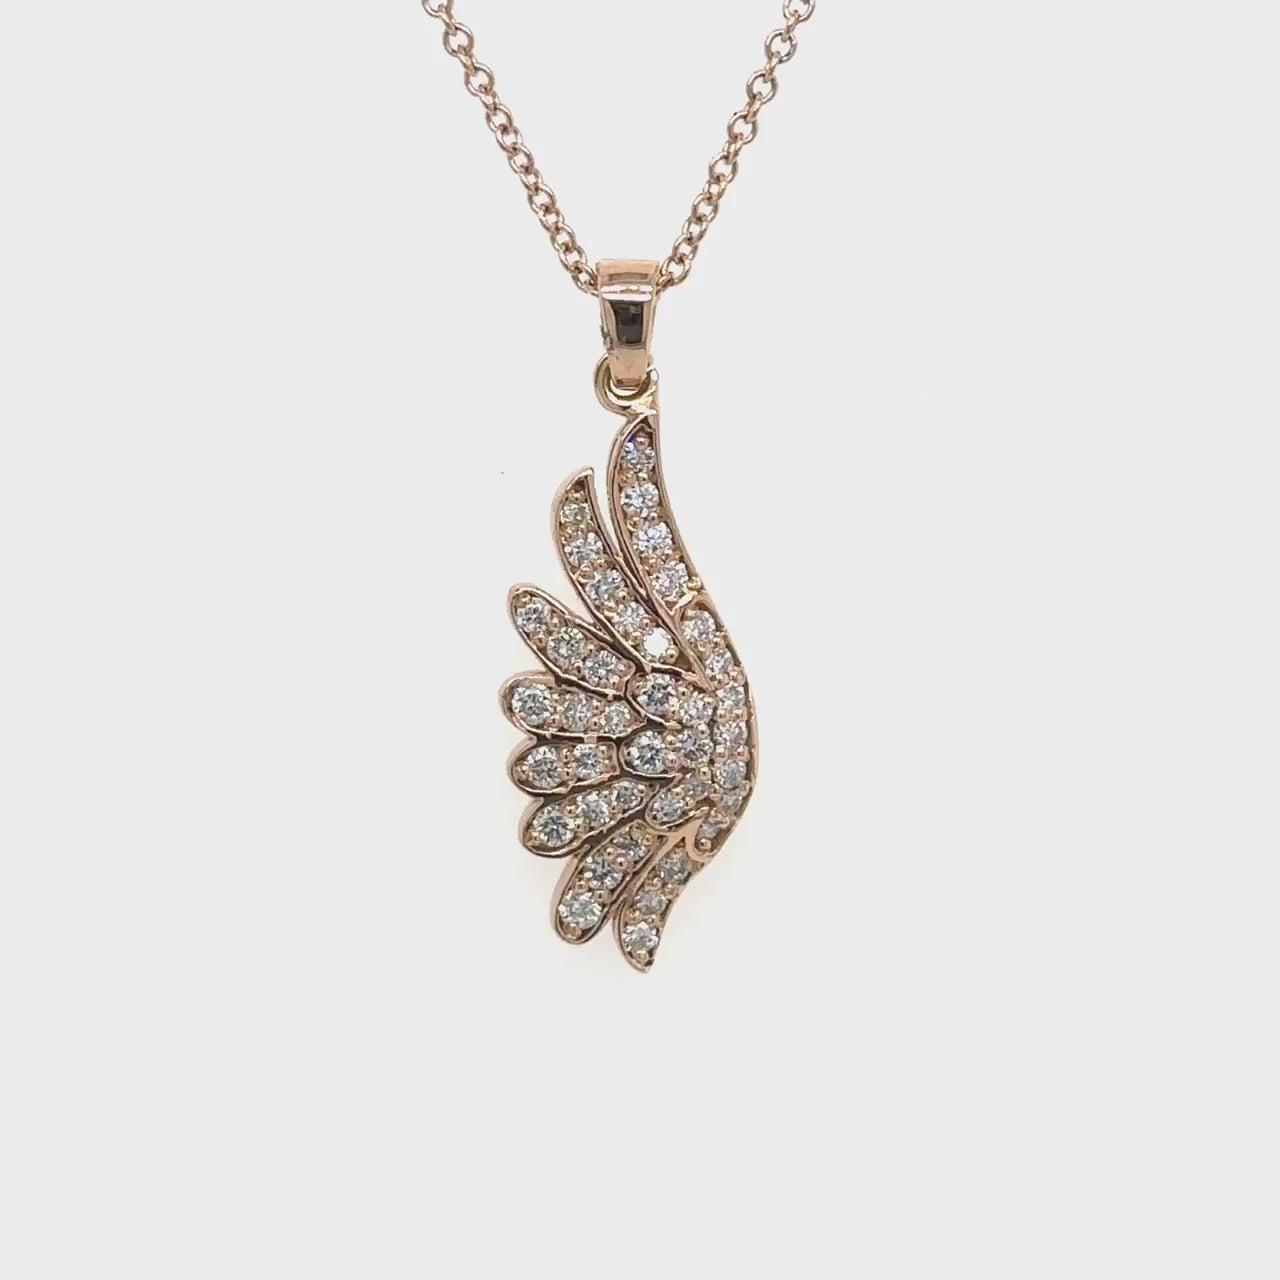  Wing-shaped, diamond pendant, jewelry accessory, elegant design, sparkling gemstones, luxury necklace, fashion statement, exquisite craftsmanship.